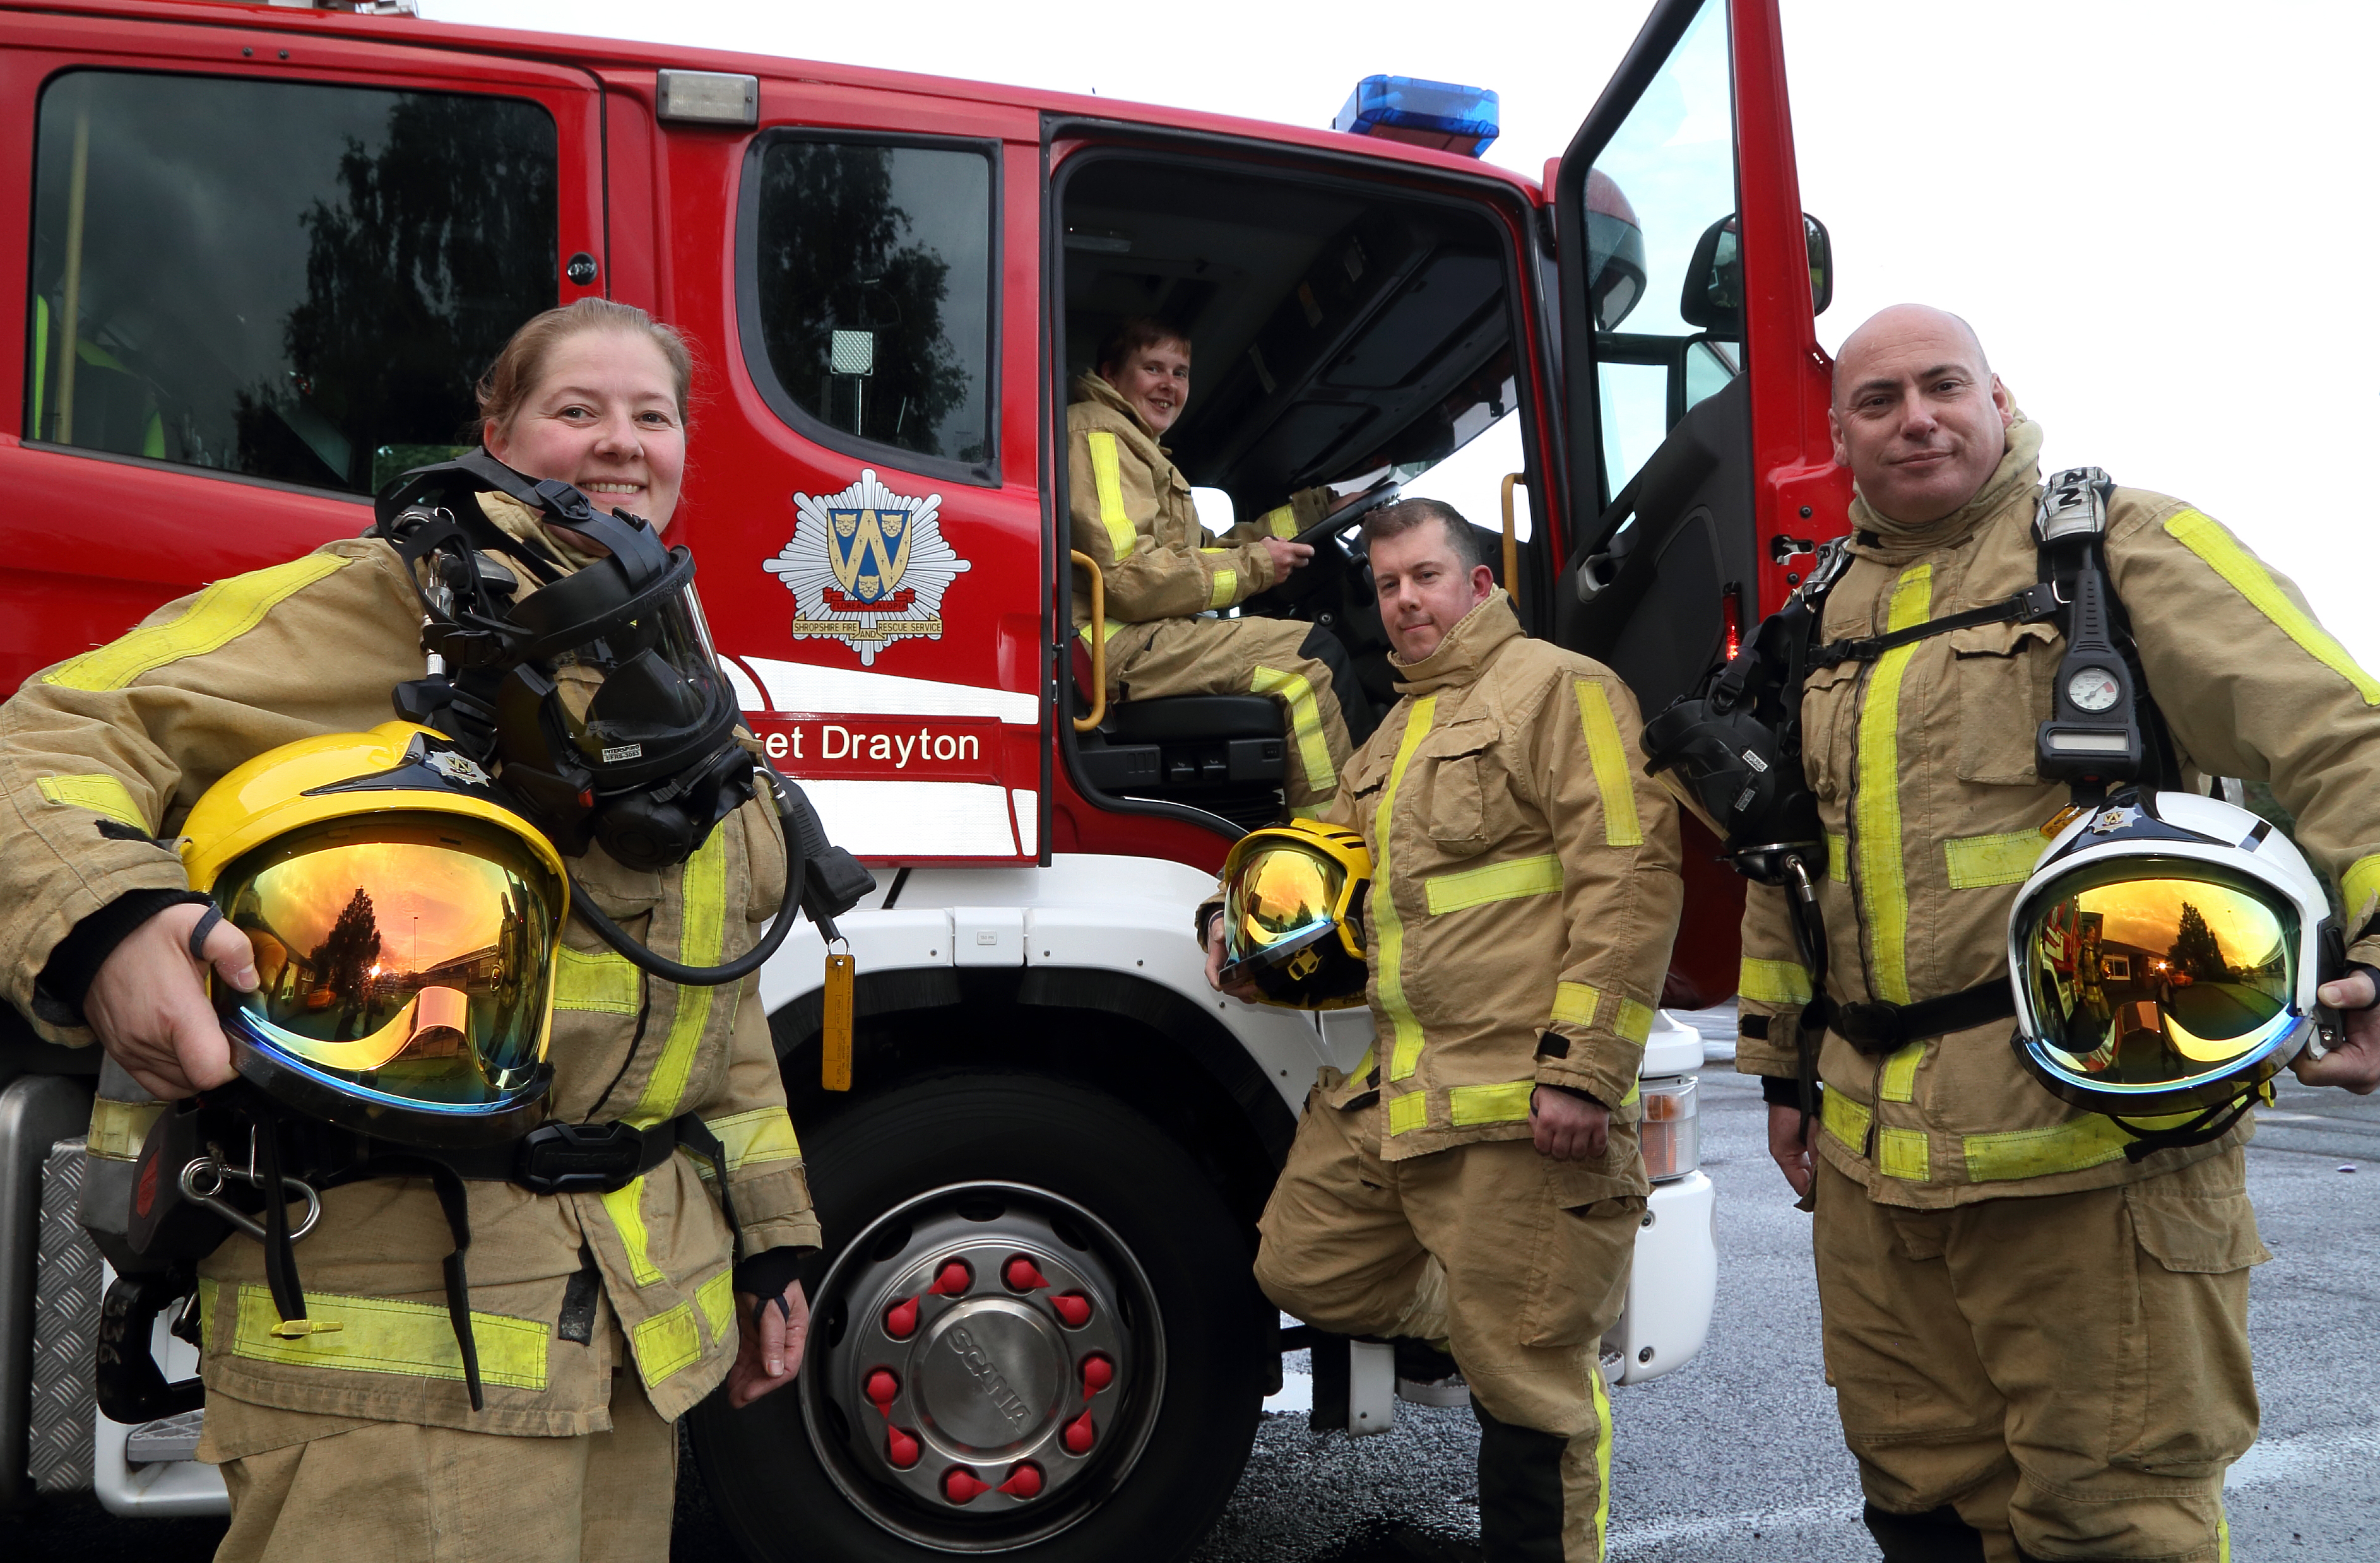 Firefighters Sarah Cartwright, Sally Eynon, Leon Turner and Mark Smith at Market Drayton Fire Station.